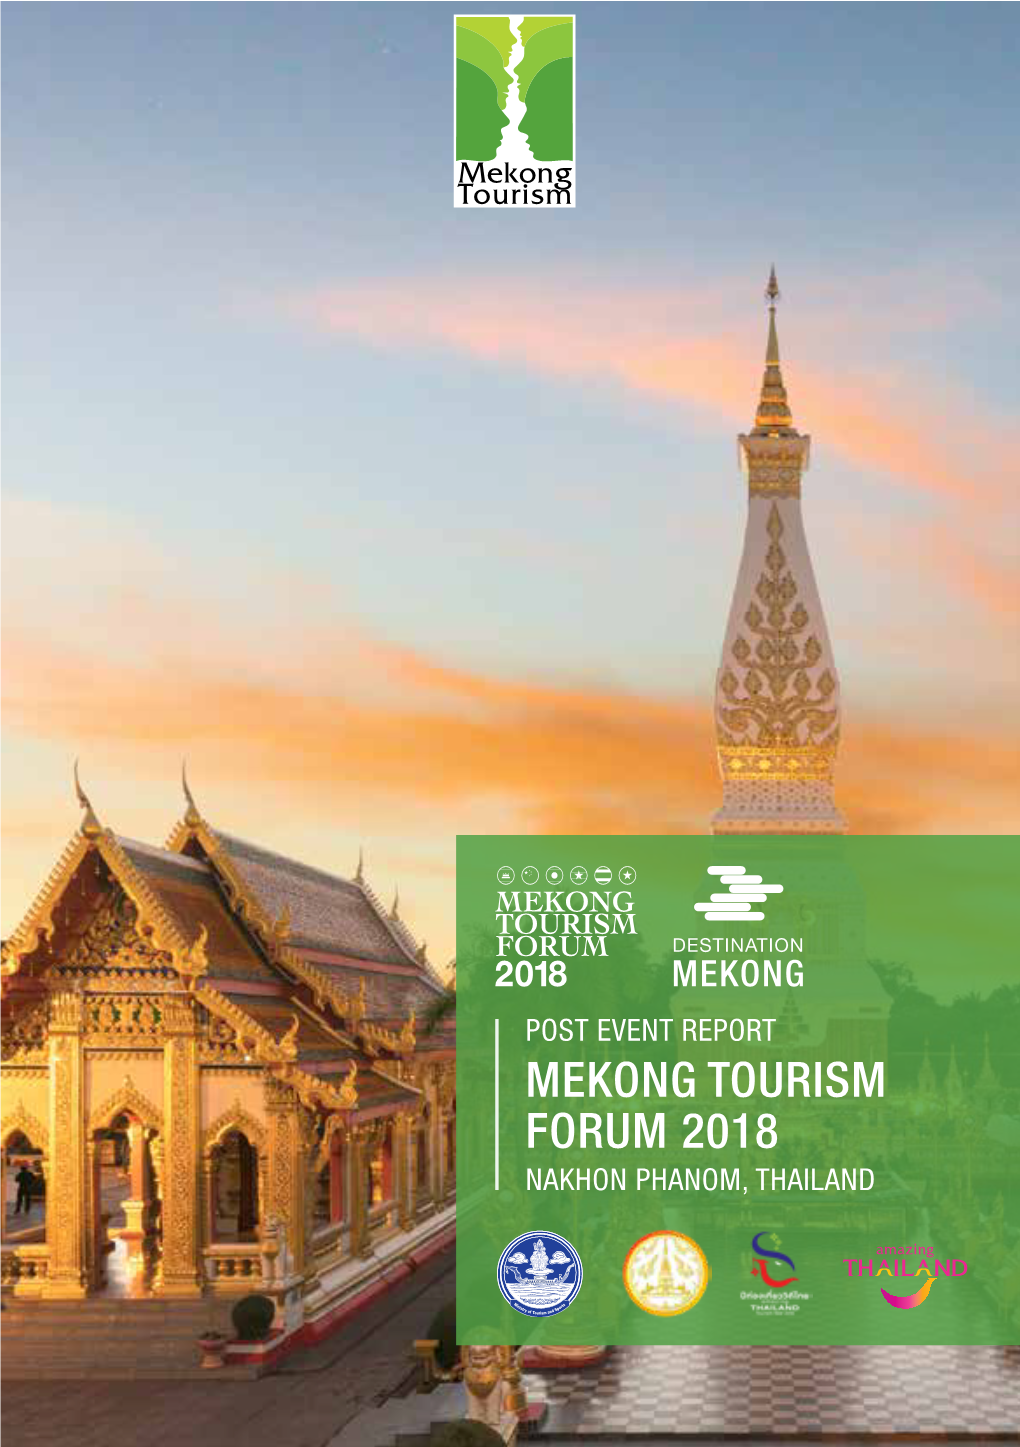 Mekong Tourism Forum 2018 Nakhon Phanom, Thailand